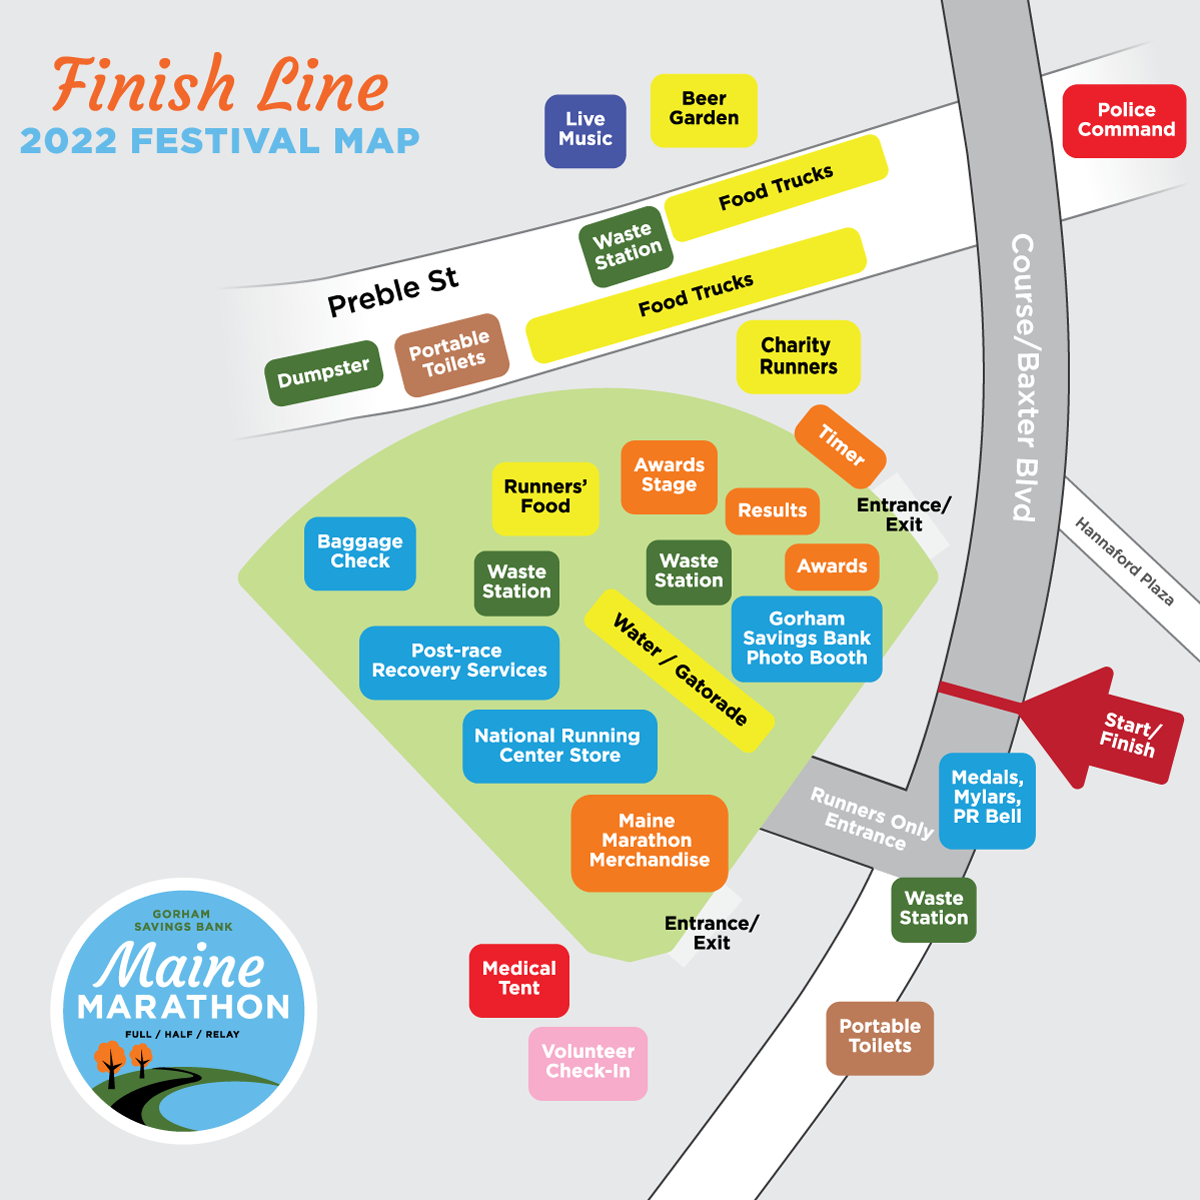 Finish line festival map 2022